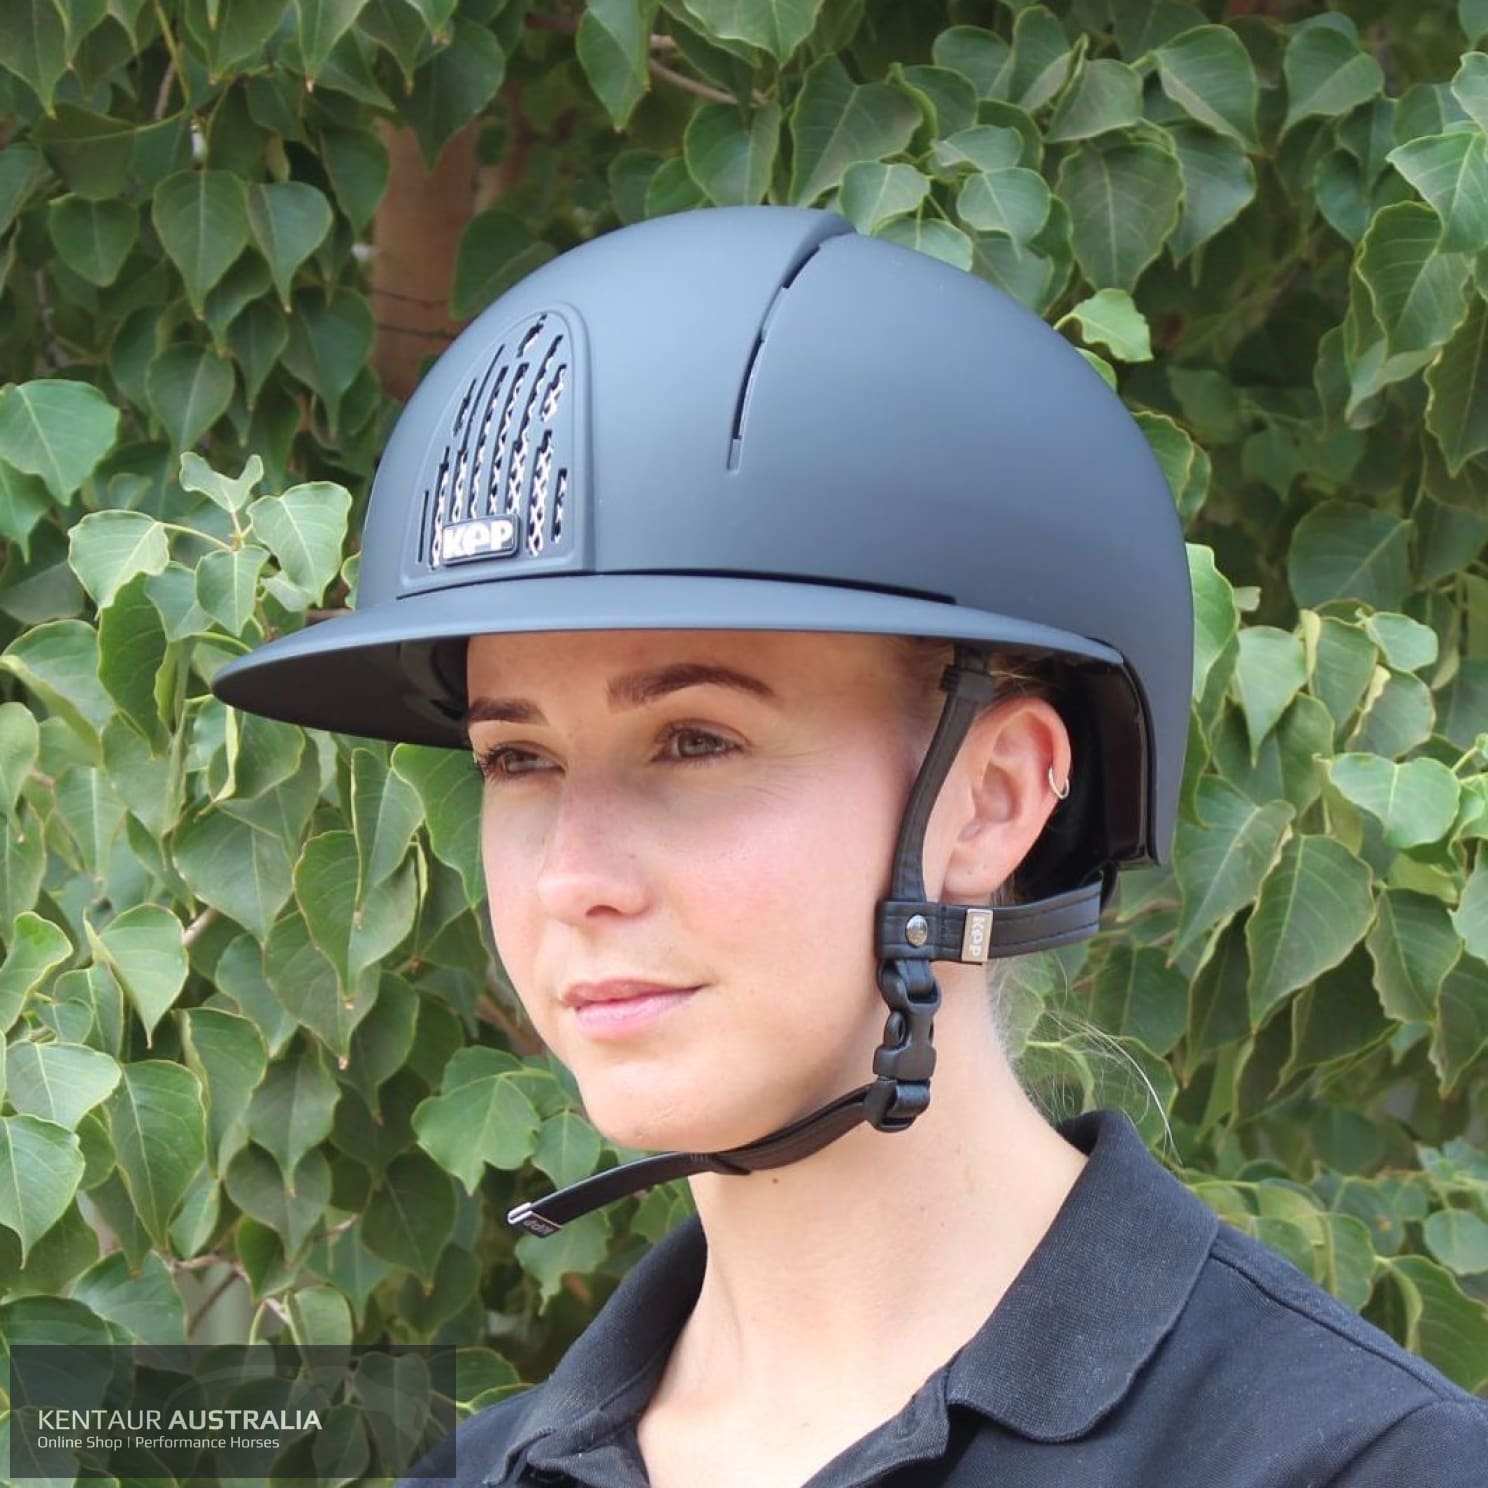 KEP ’Cromo Smart Polo Visor’ Helmet Navy / Large Shell Kep Helmets